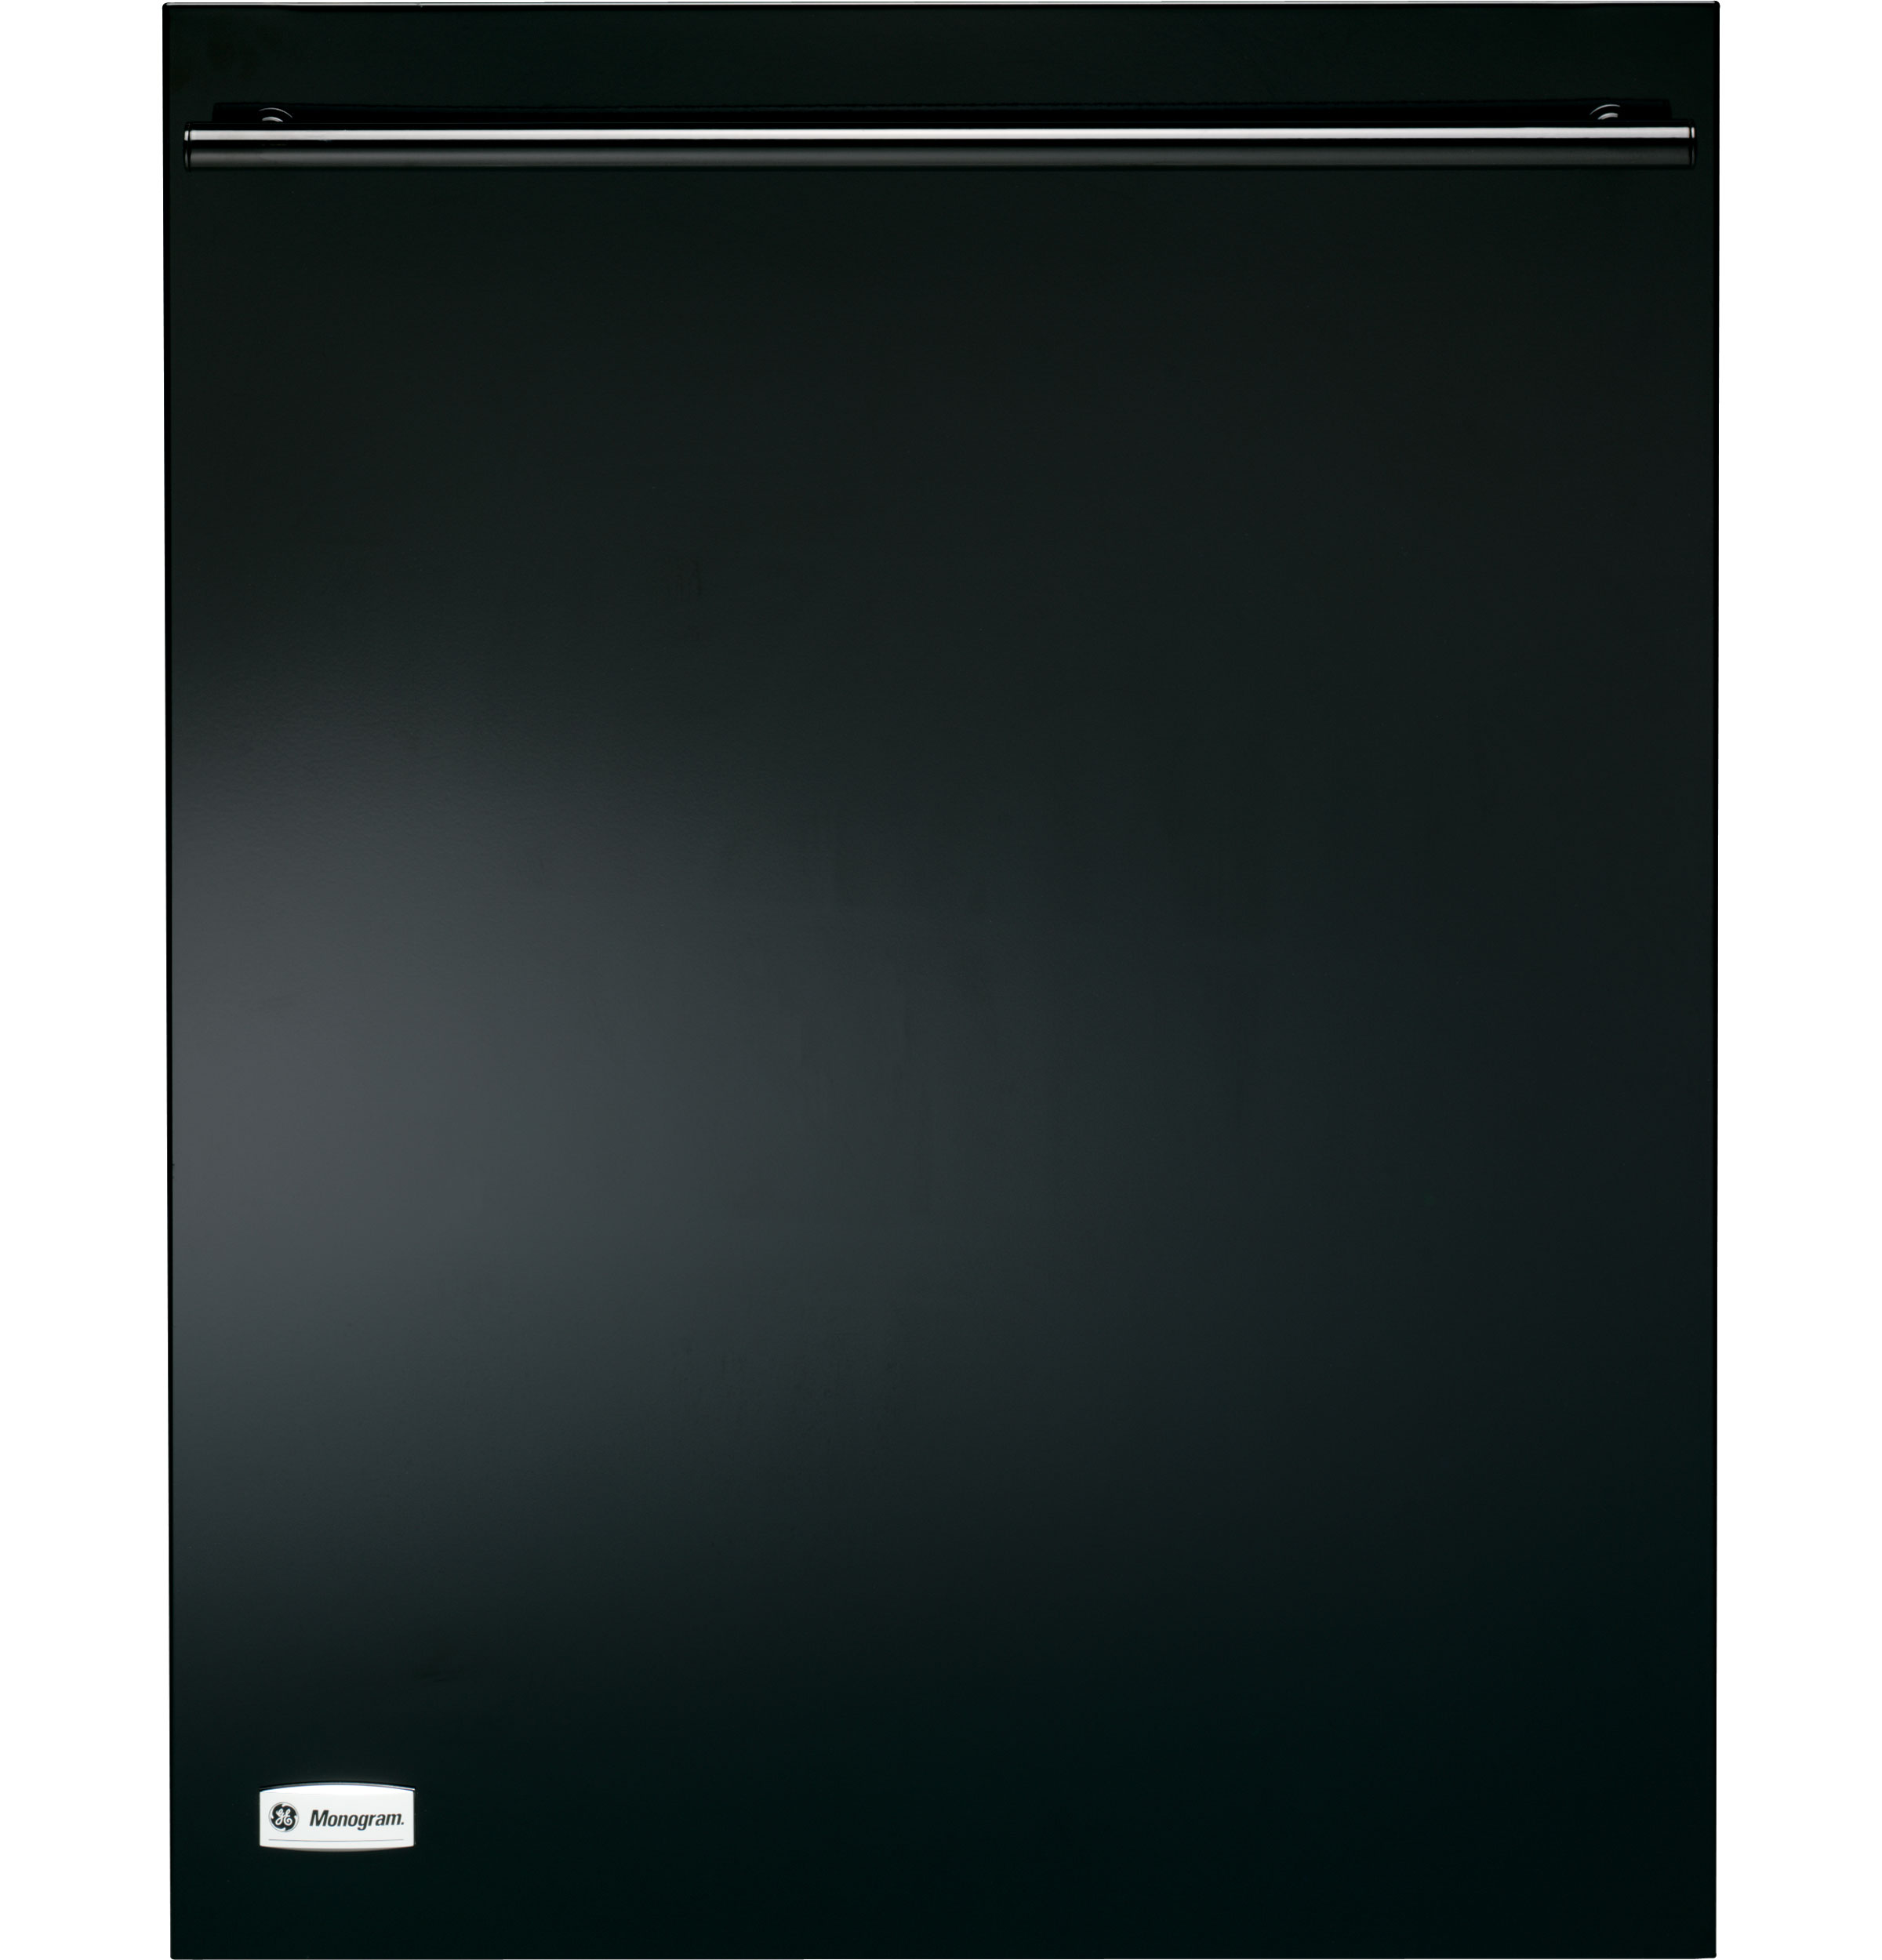 GE Monogram® Fully Integrated Dishwasher